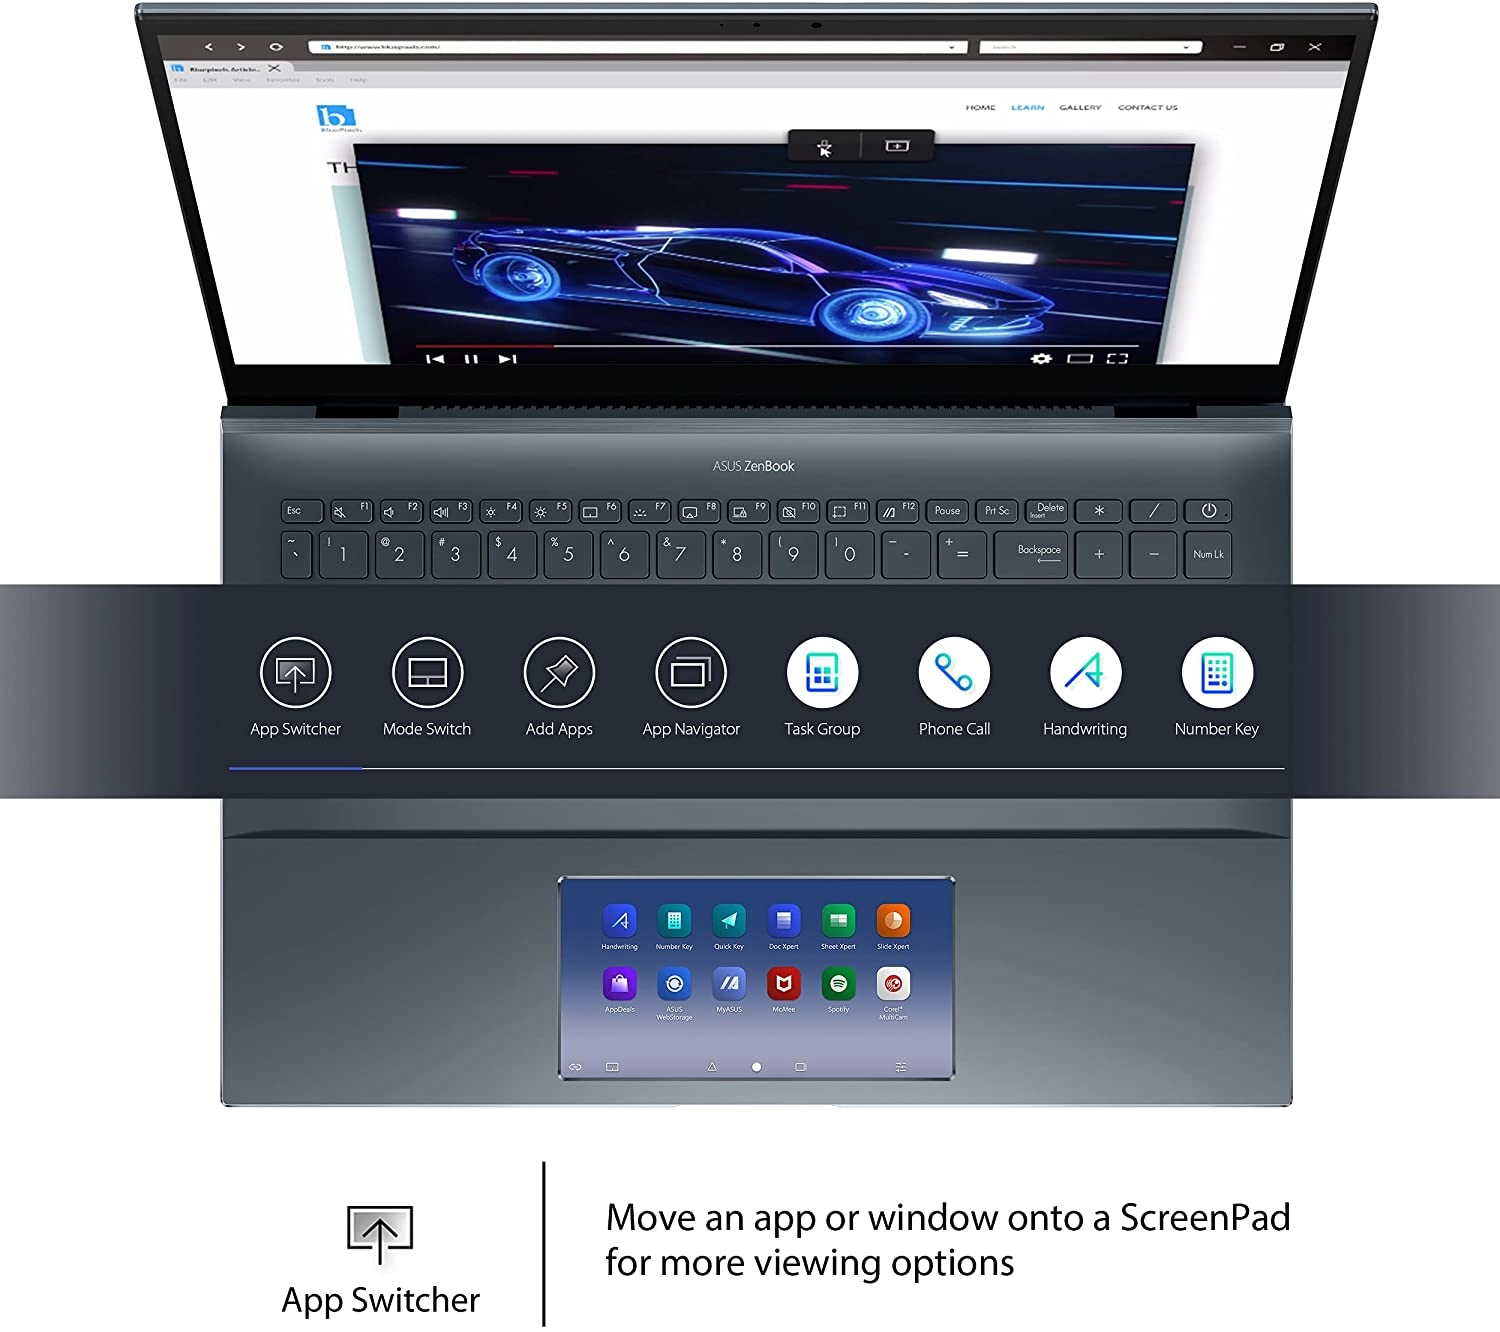 Asus ZenBook laptop image